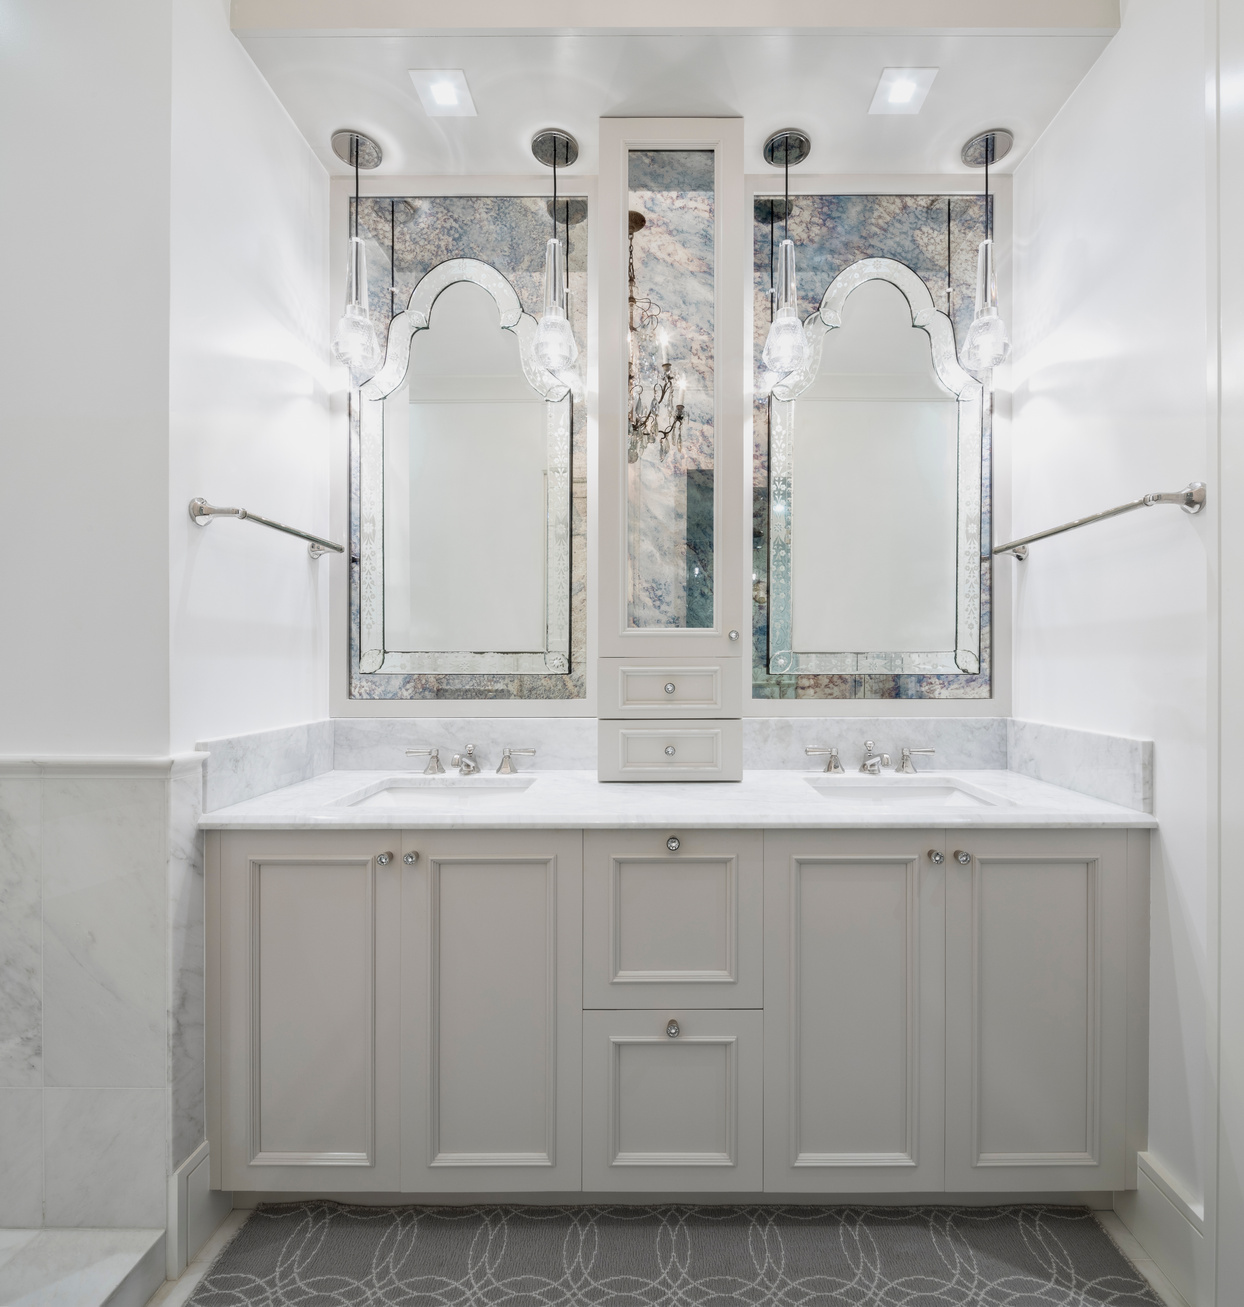 Beautiful remodeled bathroom in a condominium